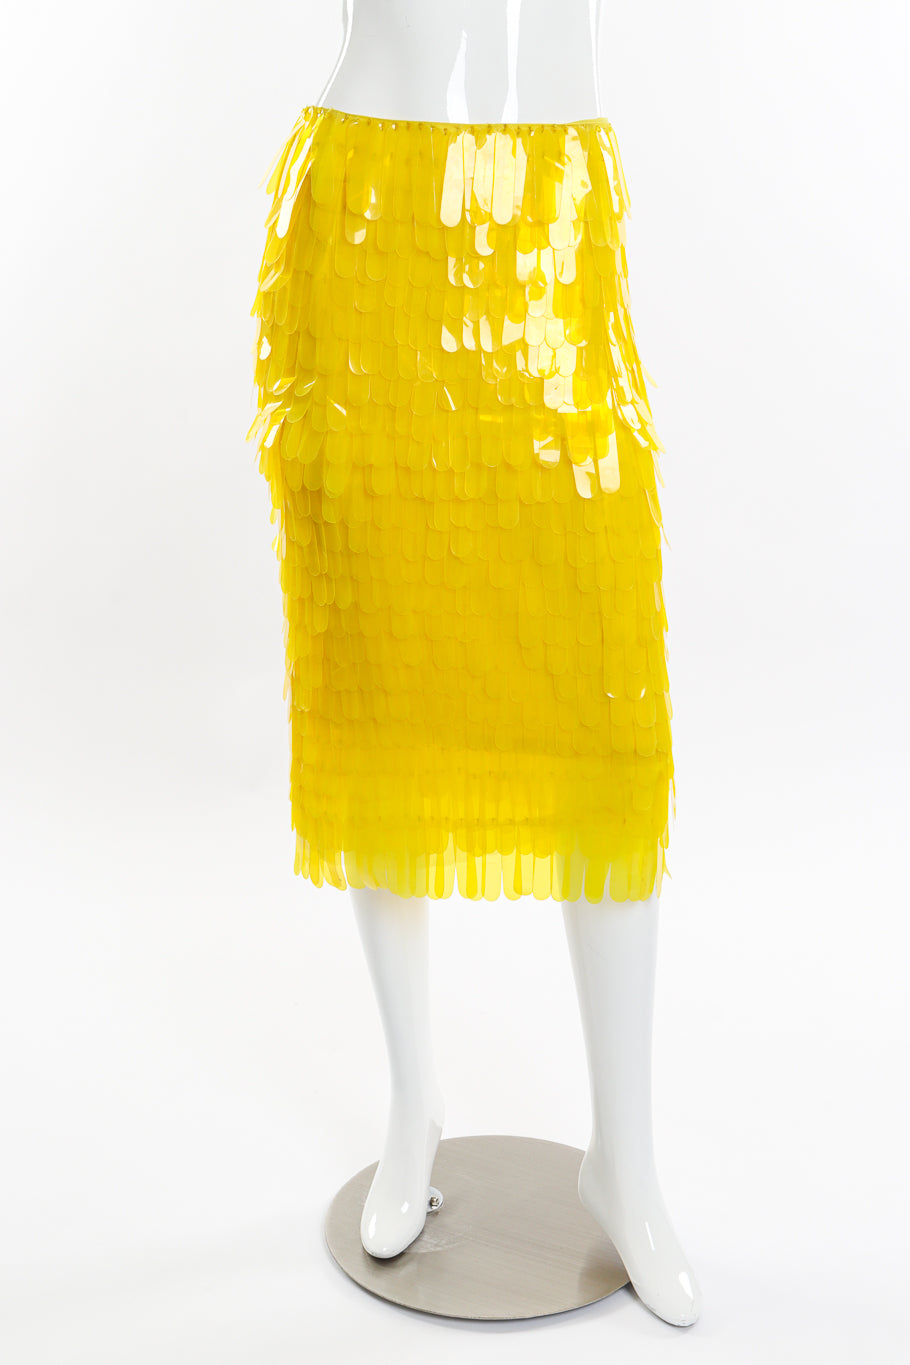 Dries Van Noten 2019 S/S Paillette Midi Skirt front @recess la